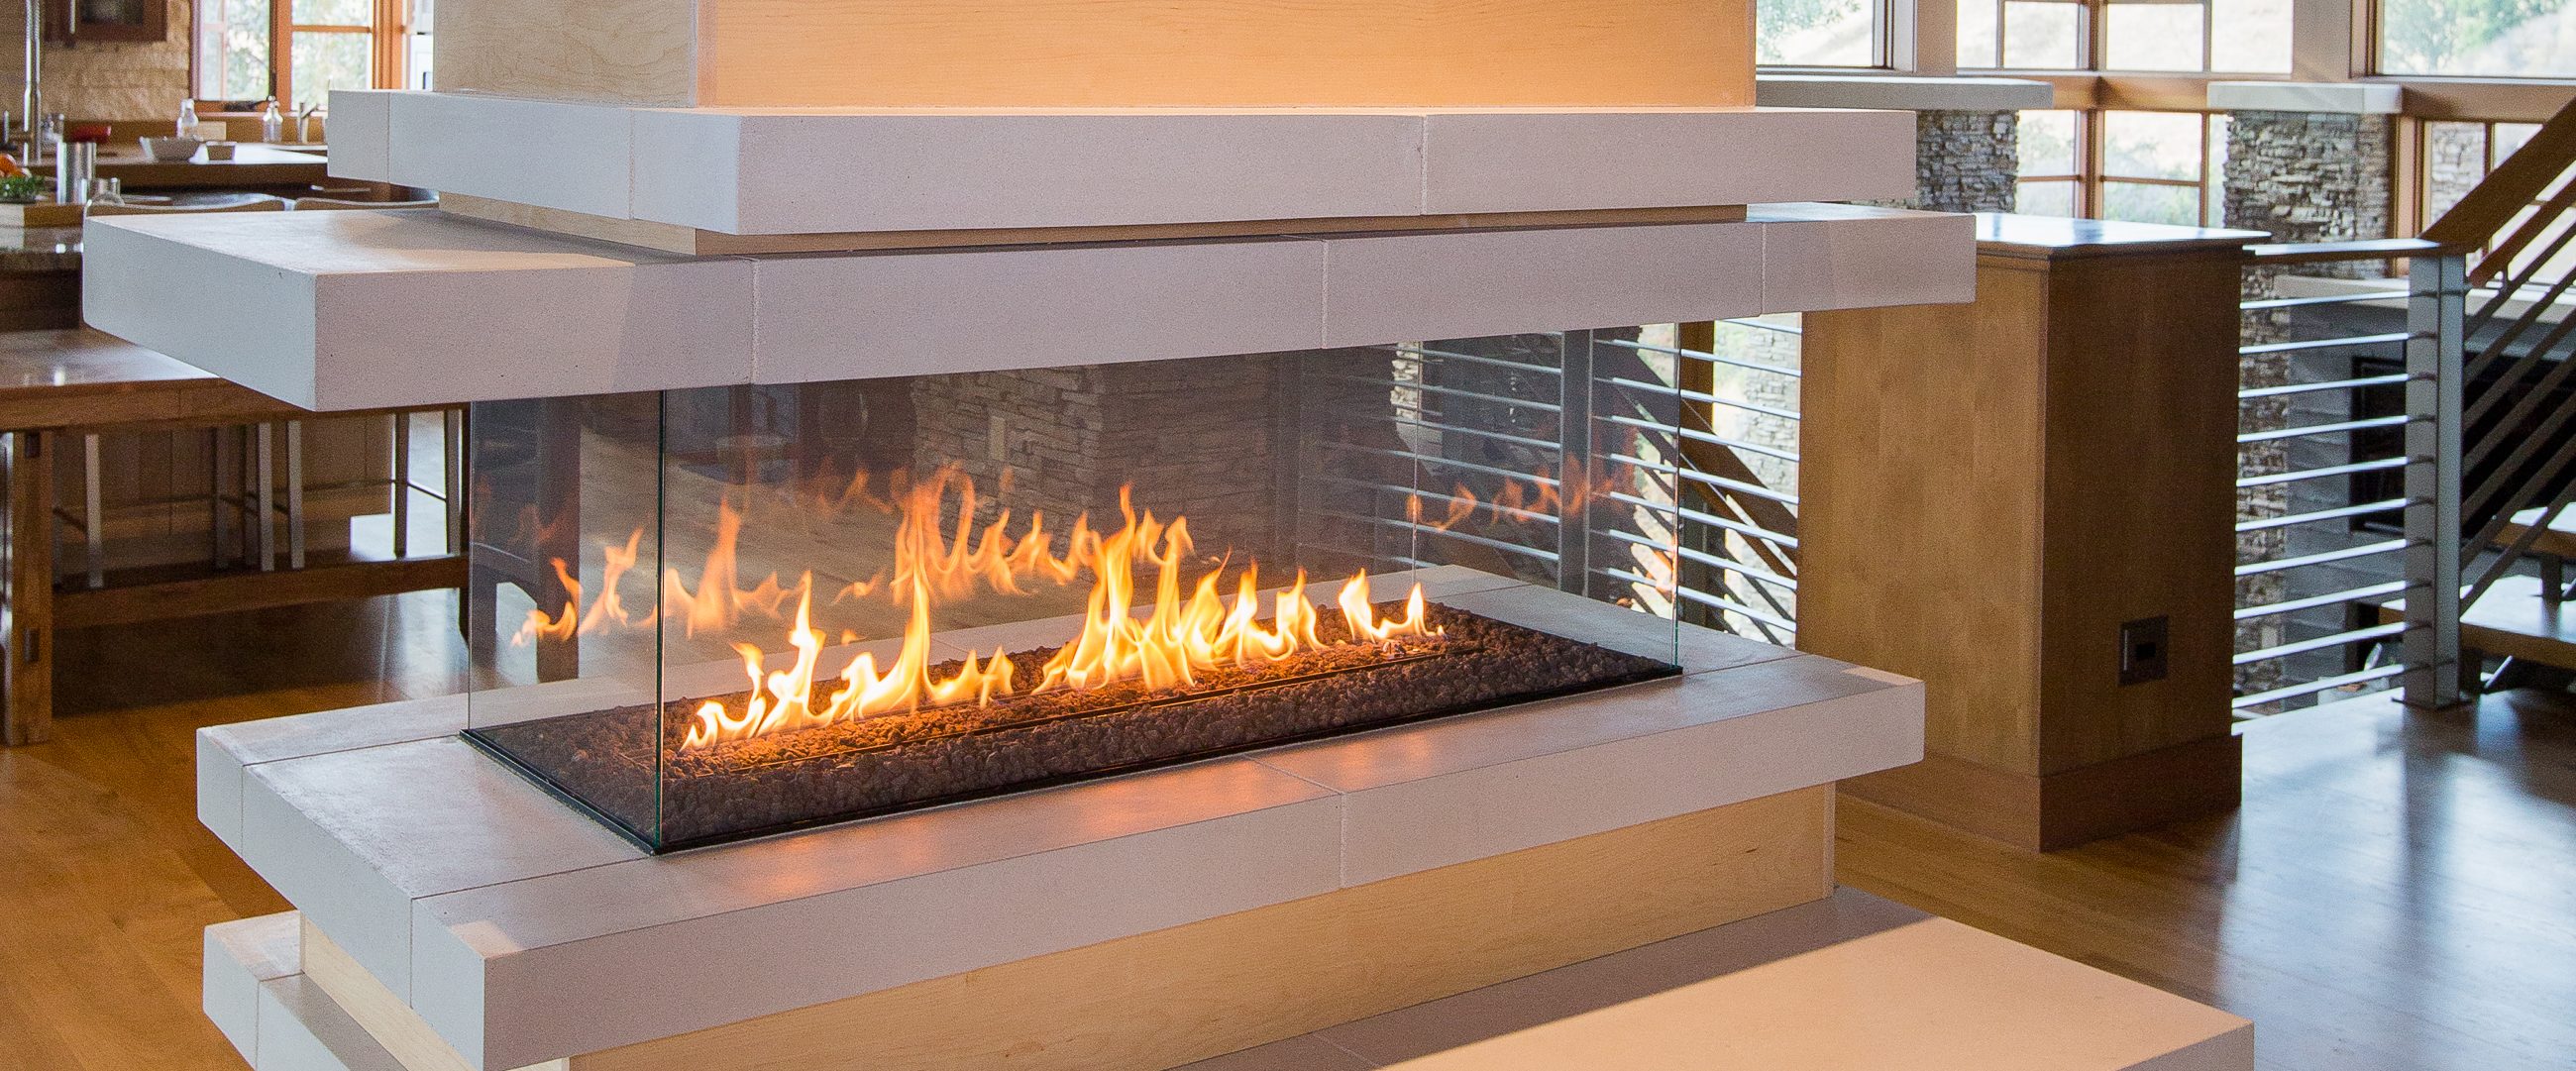 Luxurious custom fireplace